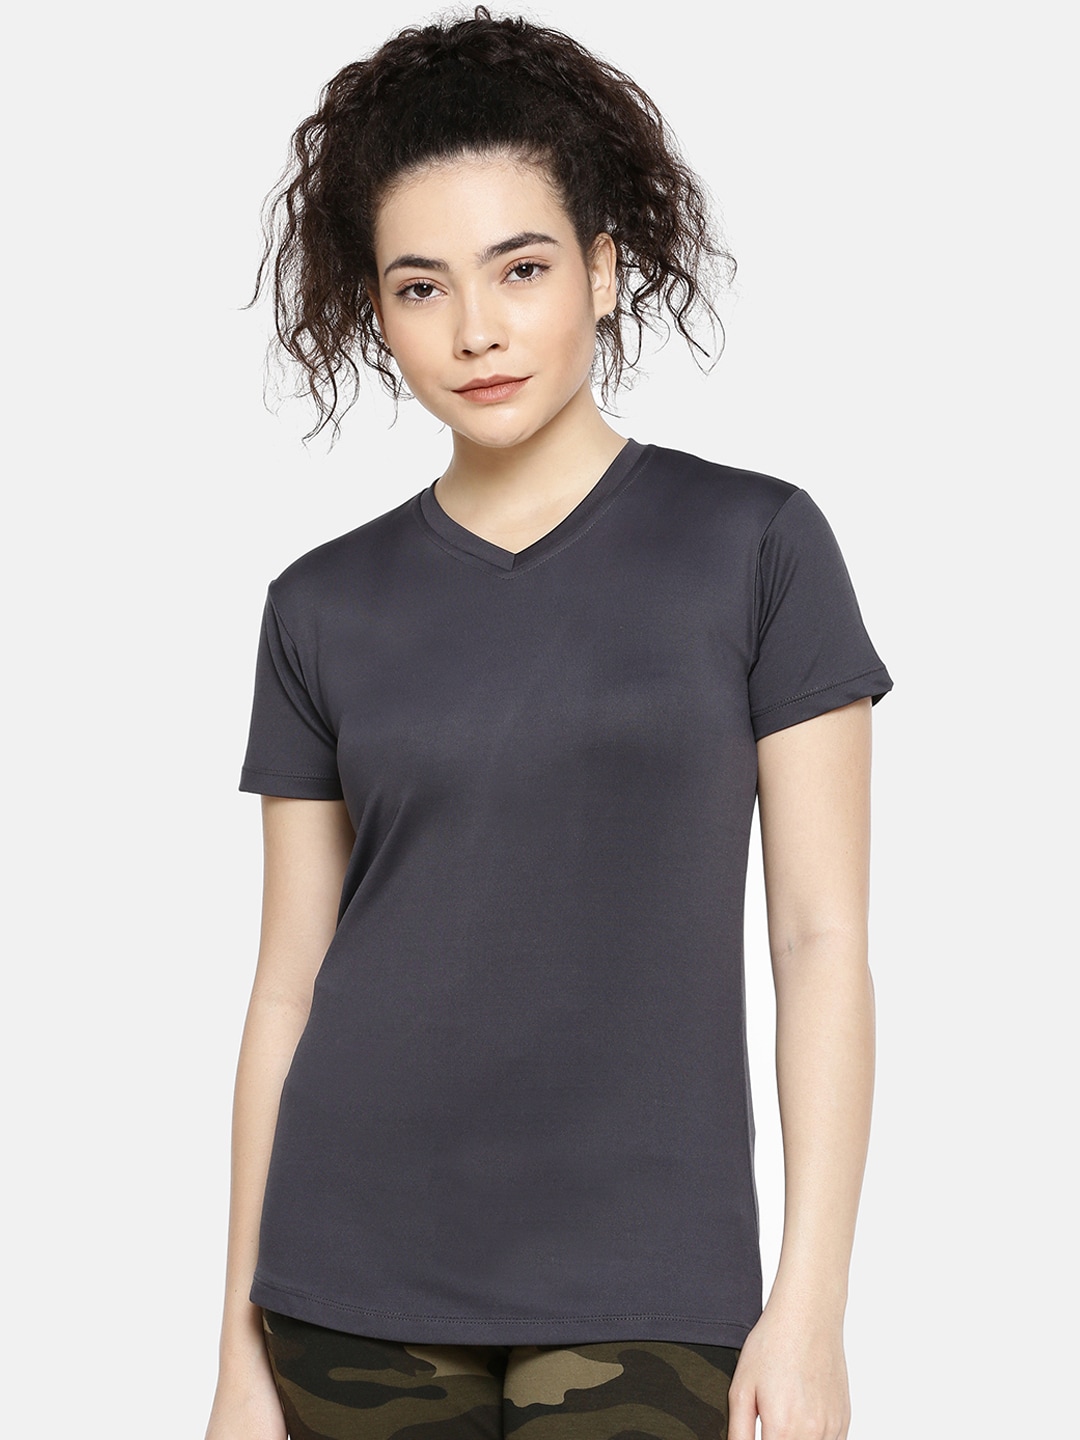 GOLDSTROMS Women Grey Solid V-Neck T-shirt Price in India